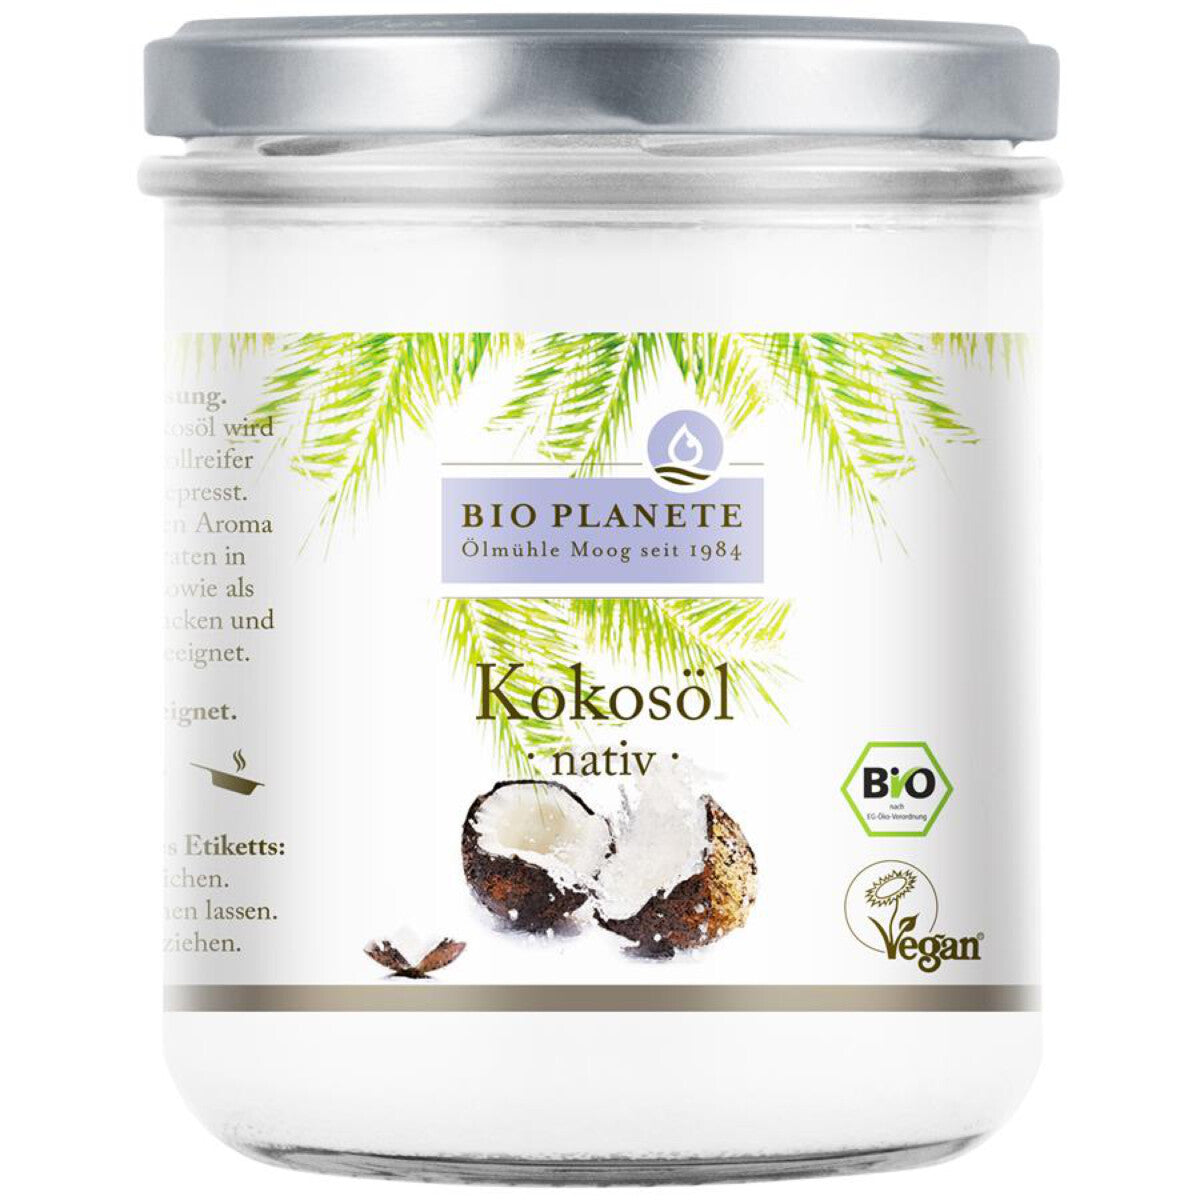 BIO PLANETE Gourmet Kokosöl nativ - 400 ml